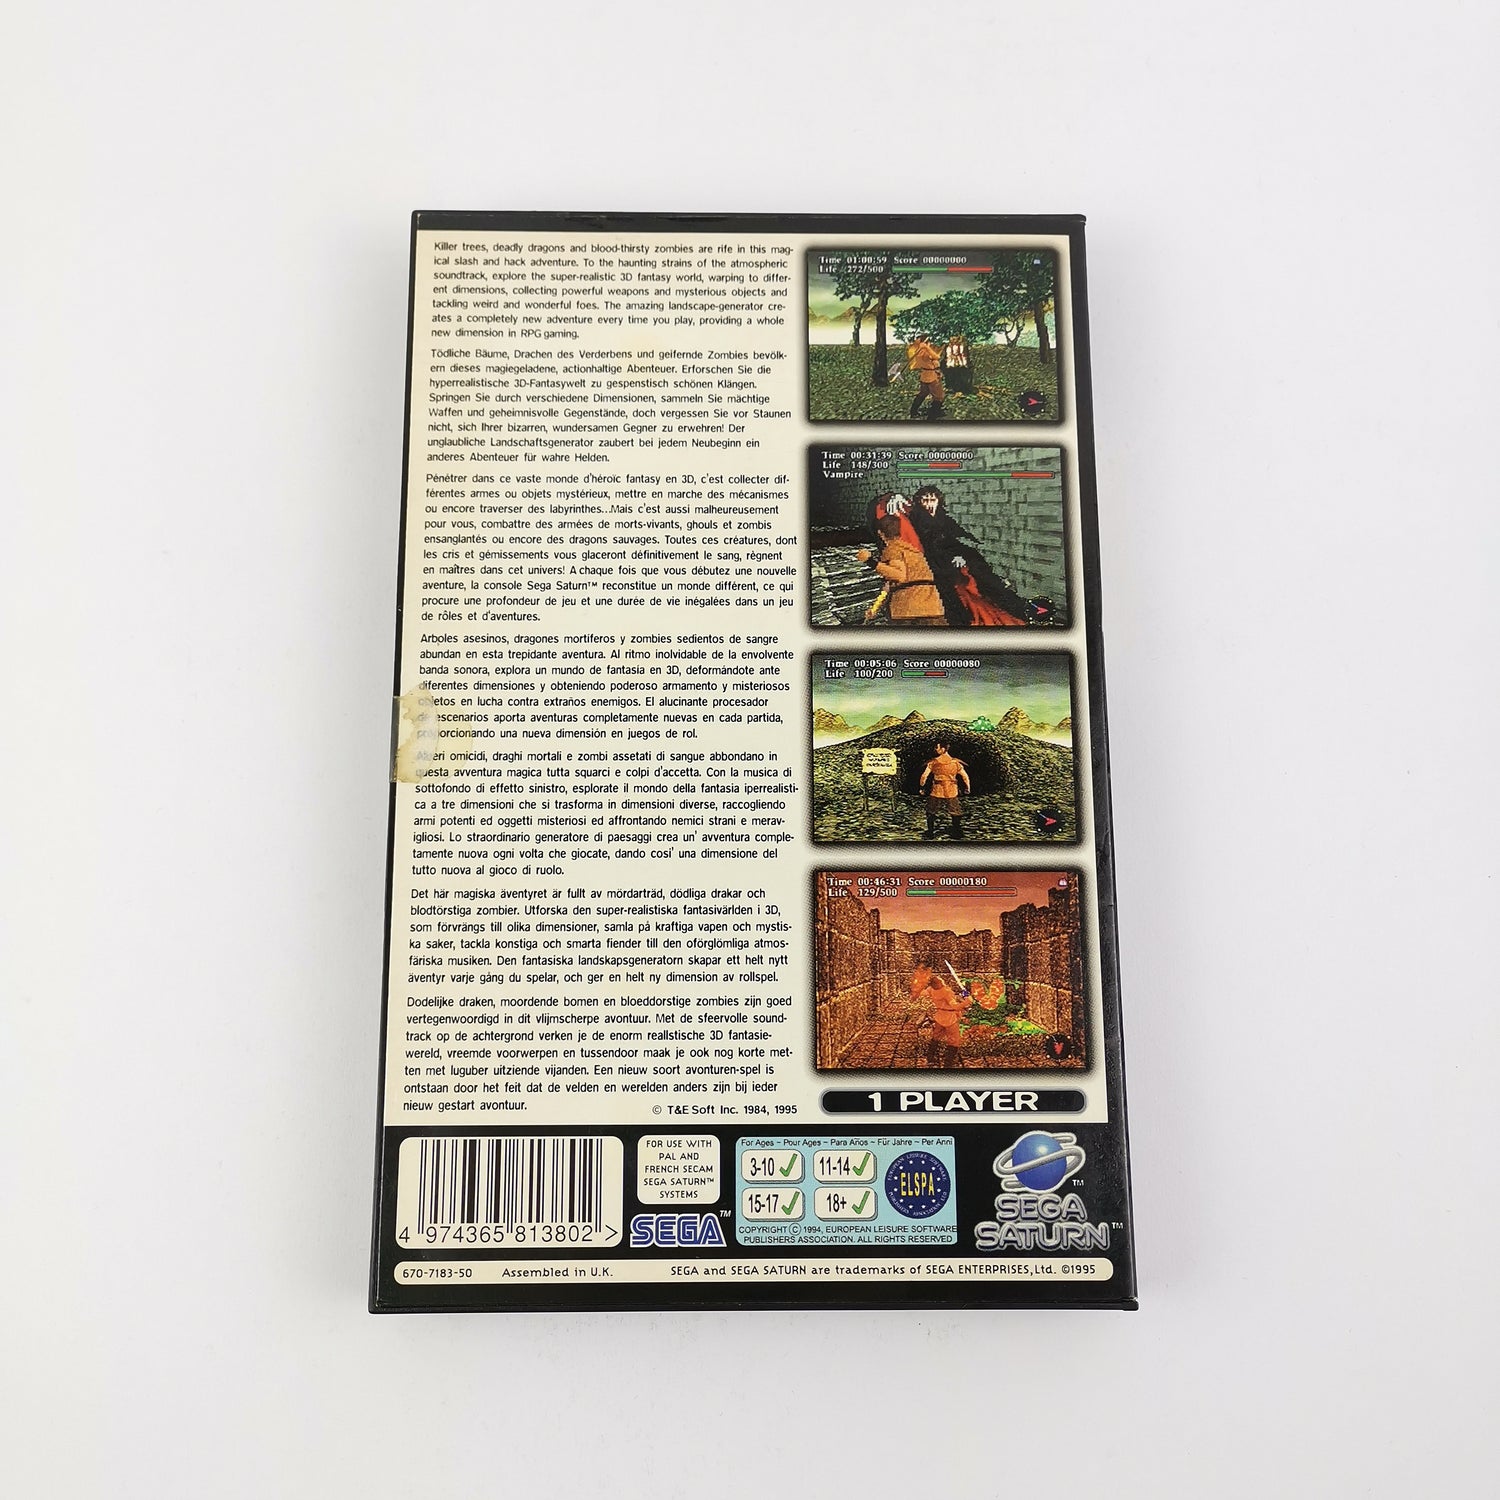 Sega Saturn Spiel : Virtual Hydlide - OVP & Anleitung PAL | SegaSaturn Disc